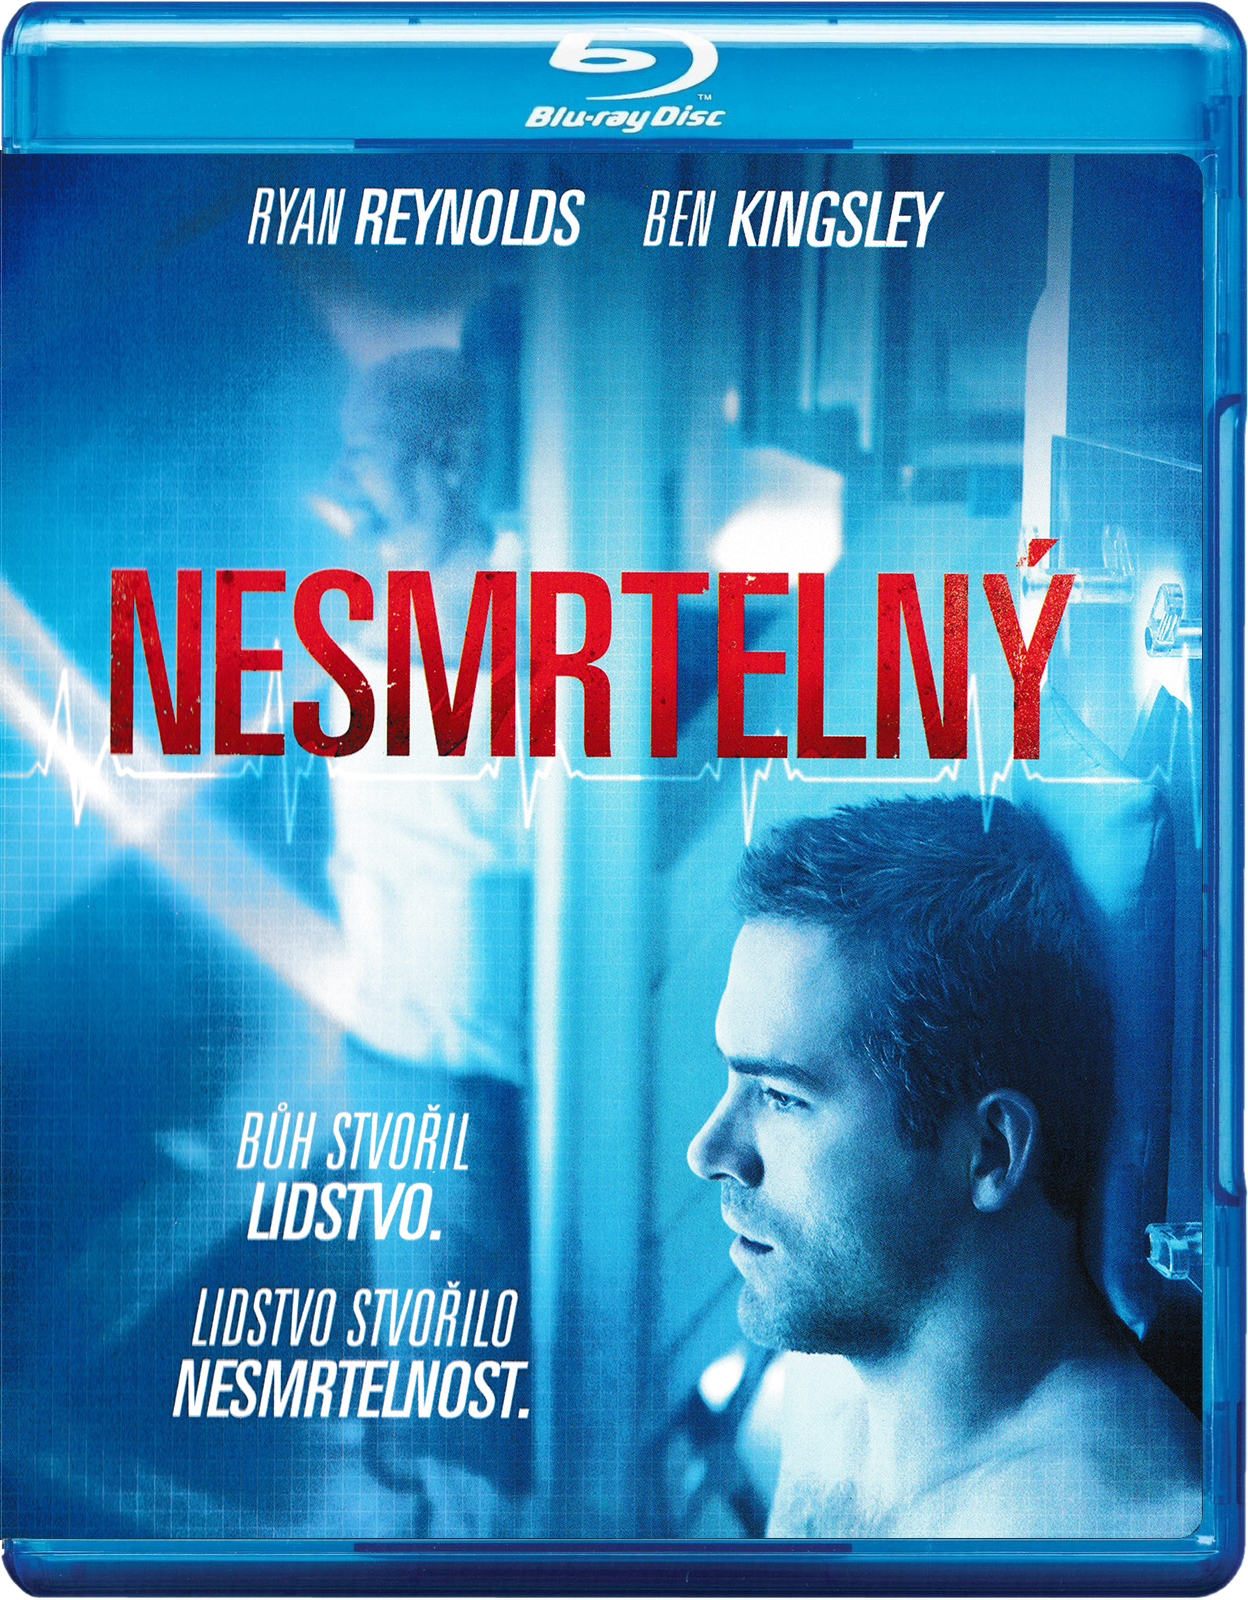 Stiahni si HD Filmy Nesmrtelny / Self/less (2015)(CZ/EN)[1080pHD] = CSFD 66%